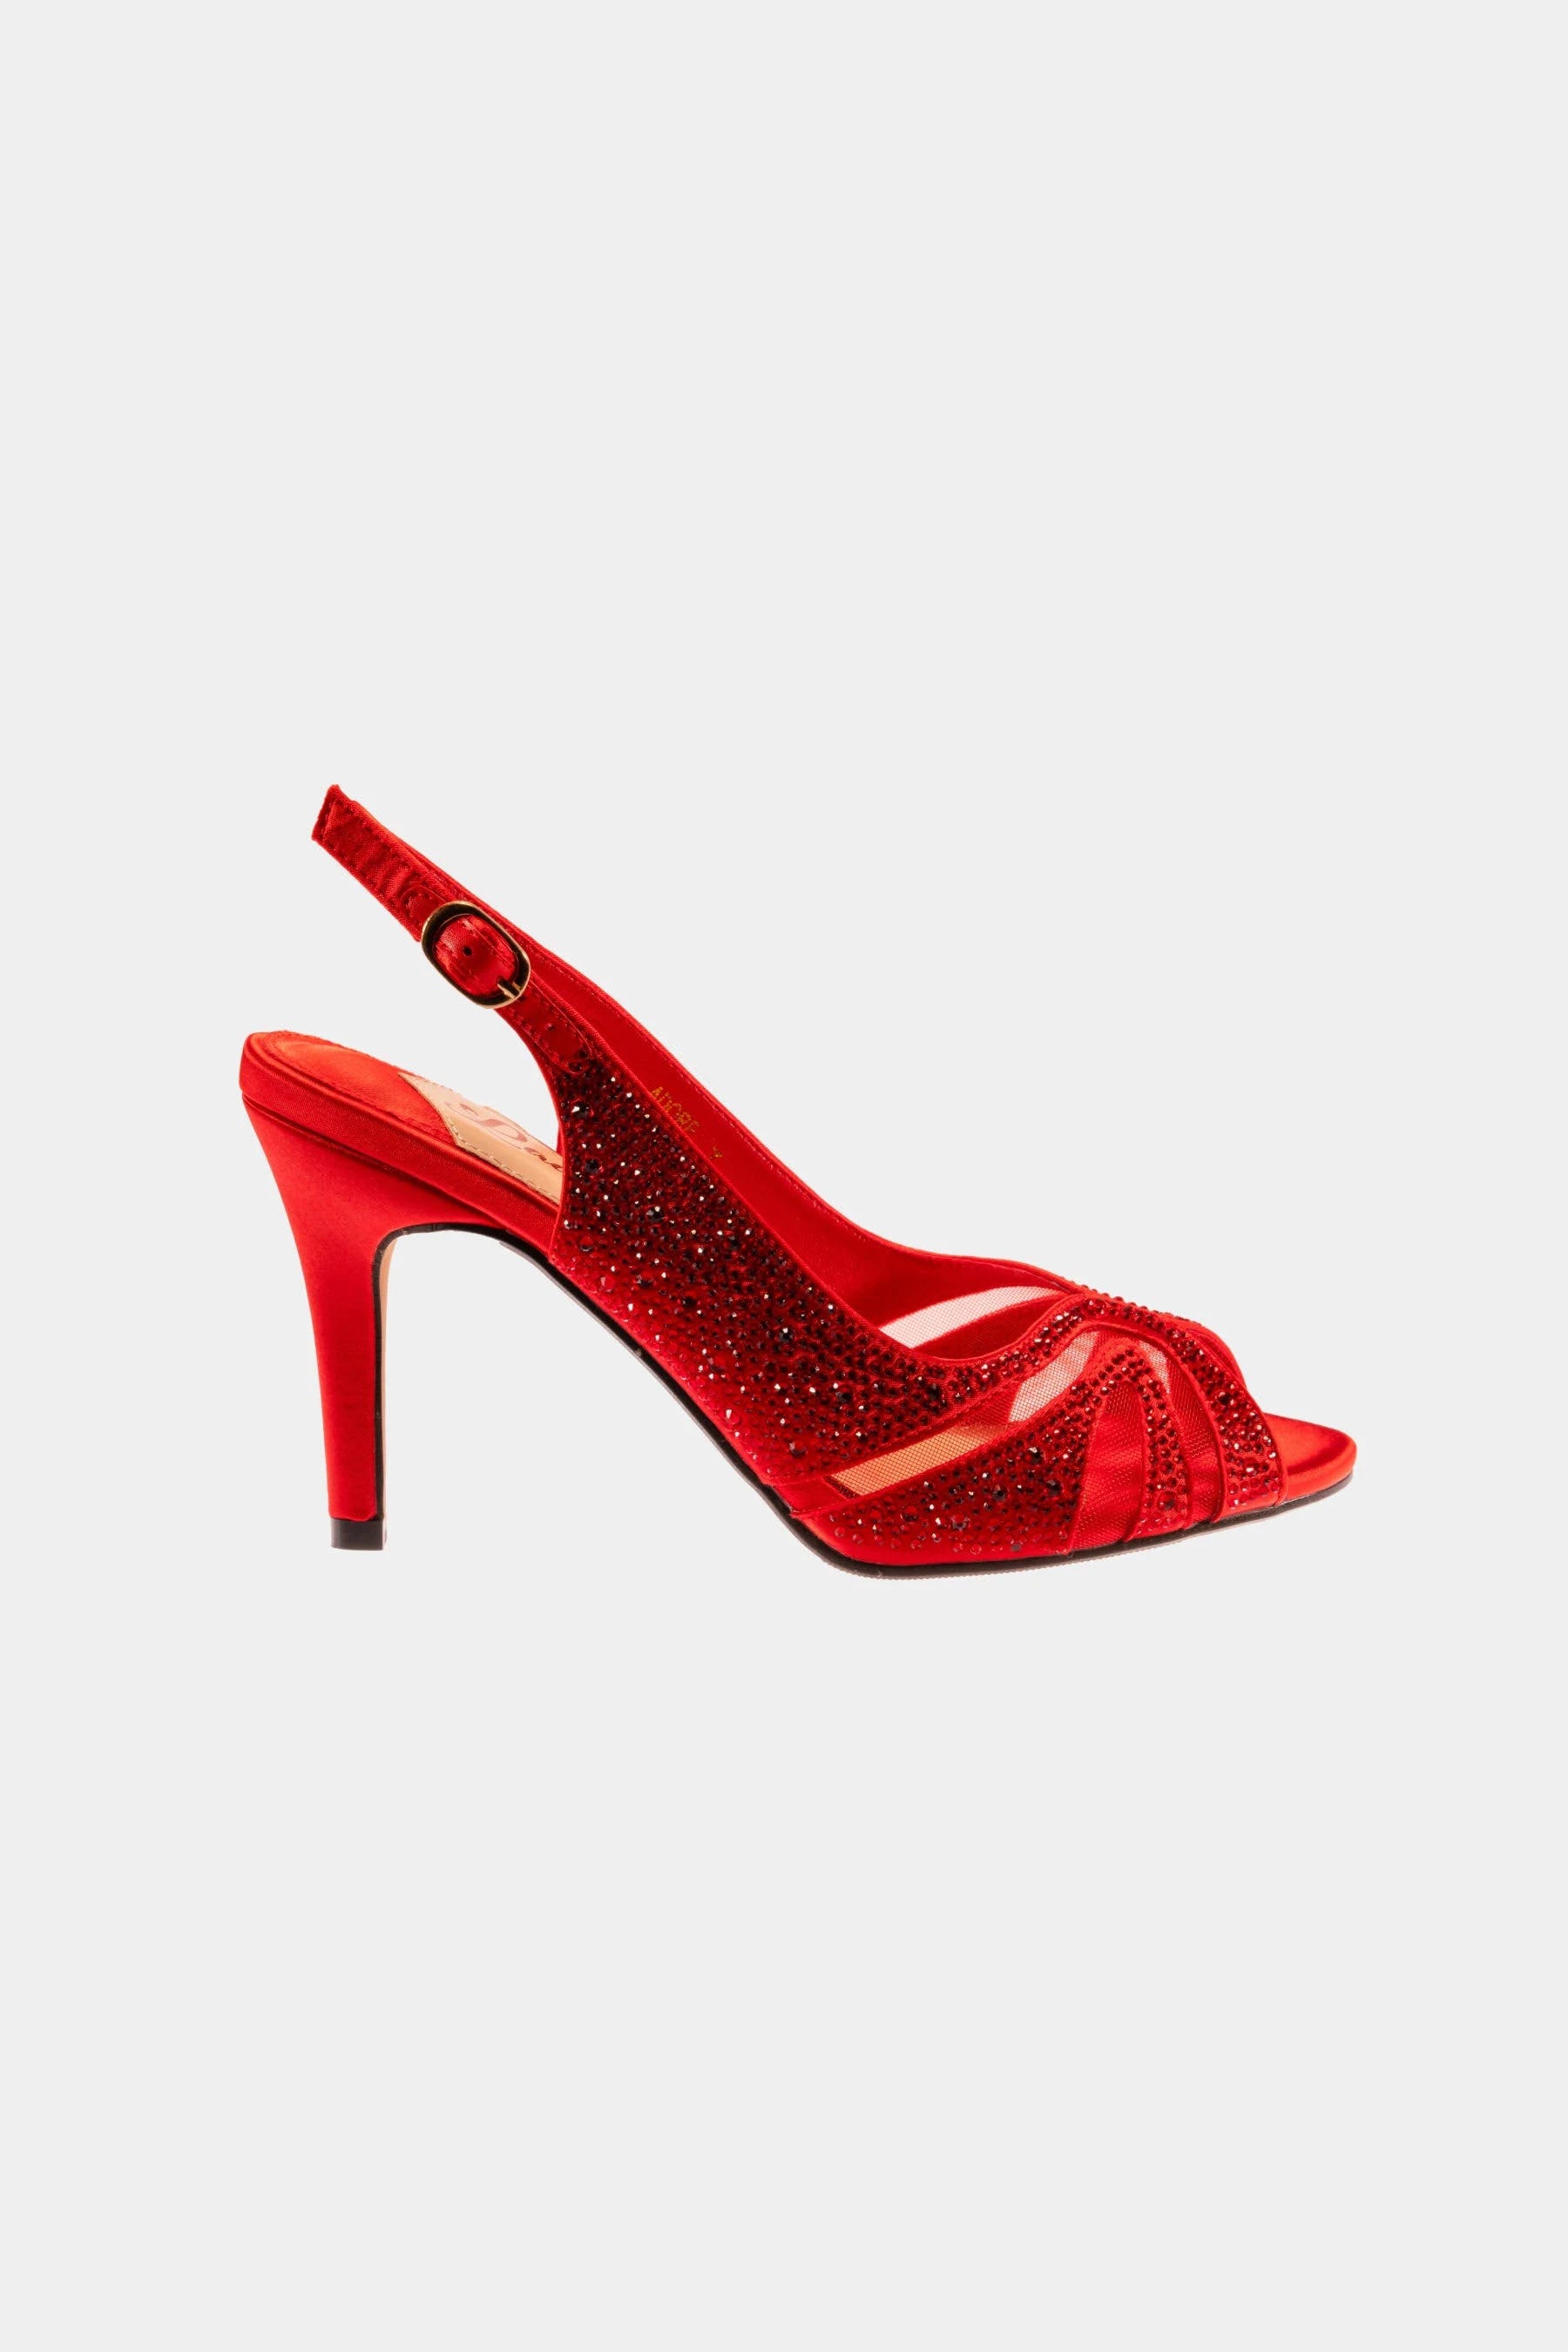 Elegant Red Slingback Heels for Every Event | Image